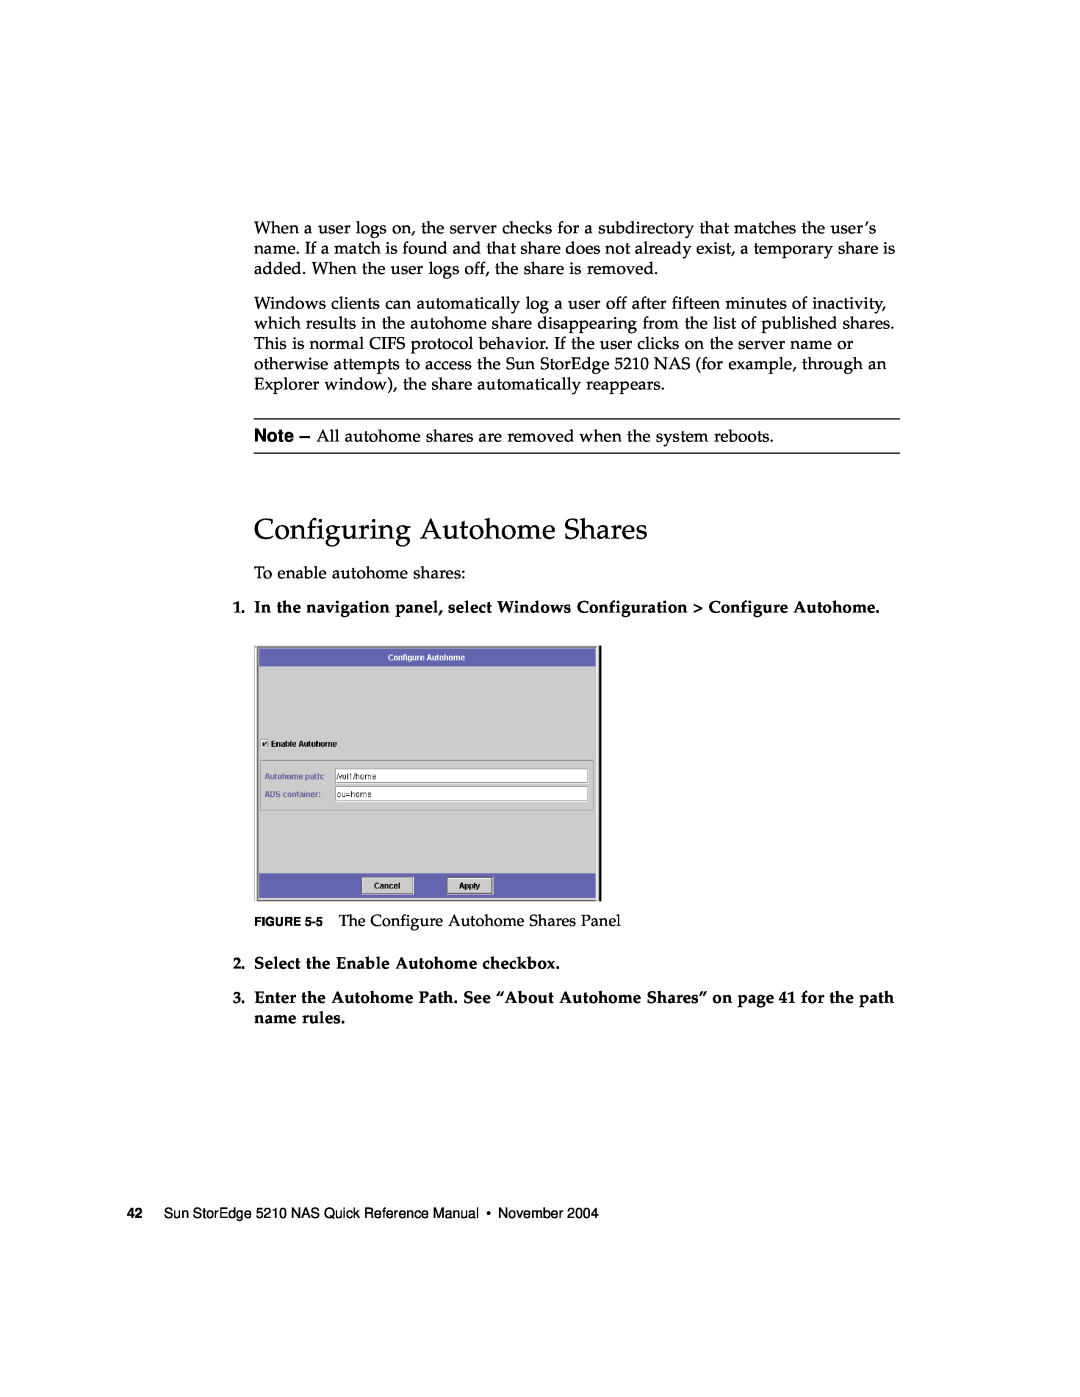 Sun Microsystems 5210 NAS manual Configuring Autohome Shares 